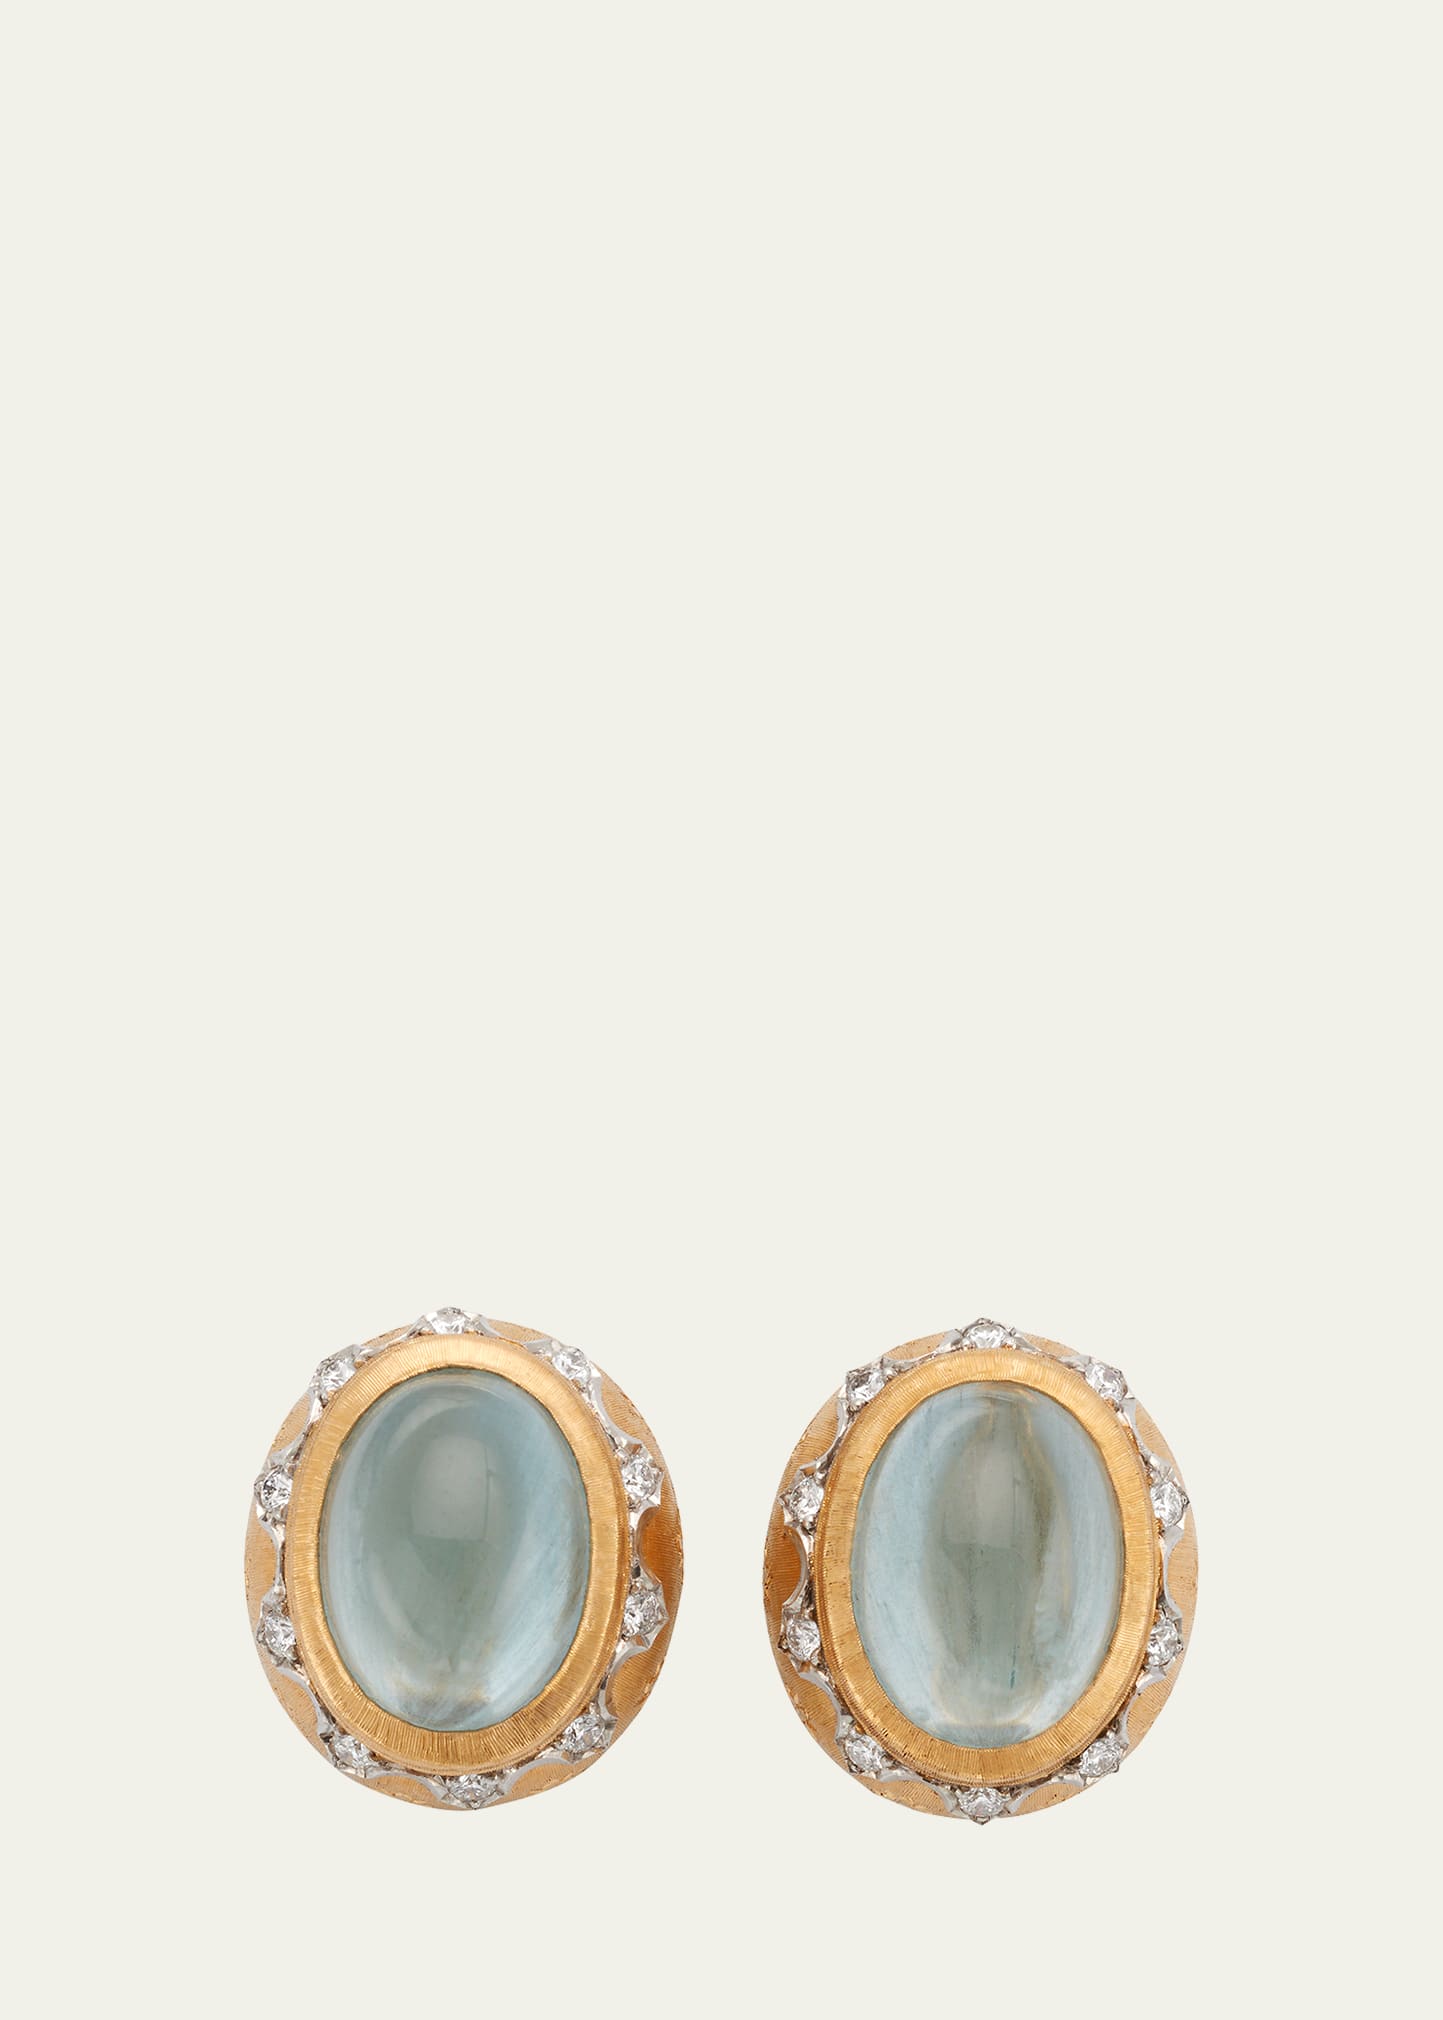 Buccellati Macri Color Earrings with Aquamarine and Diamonds